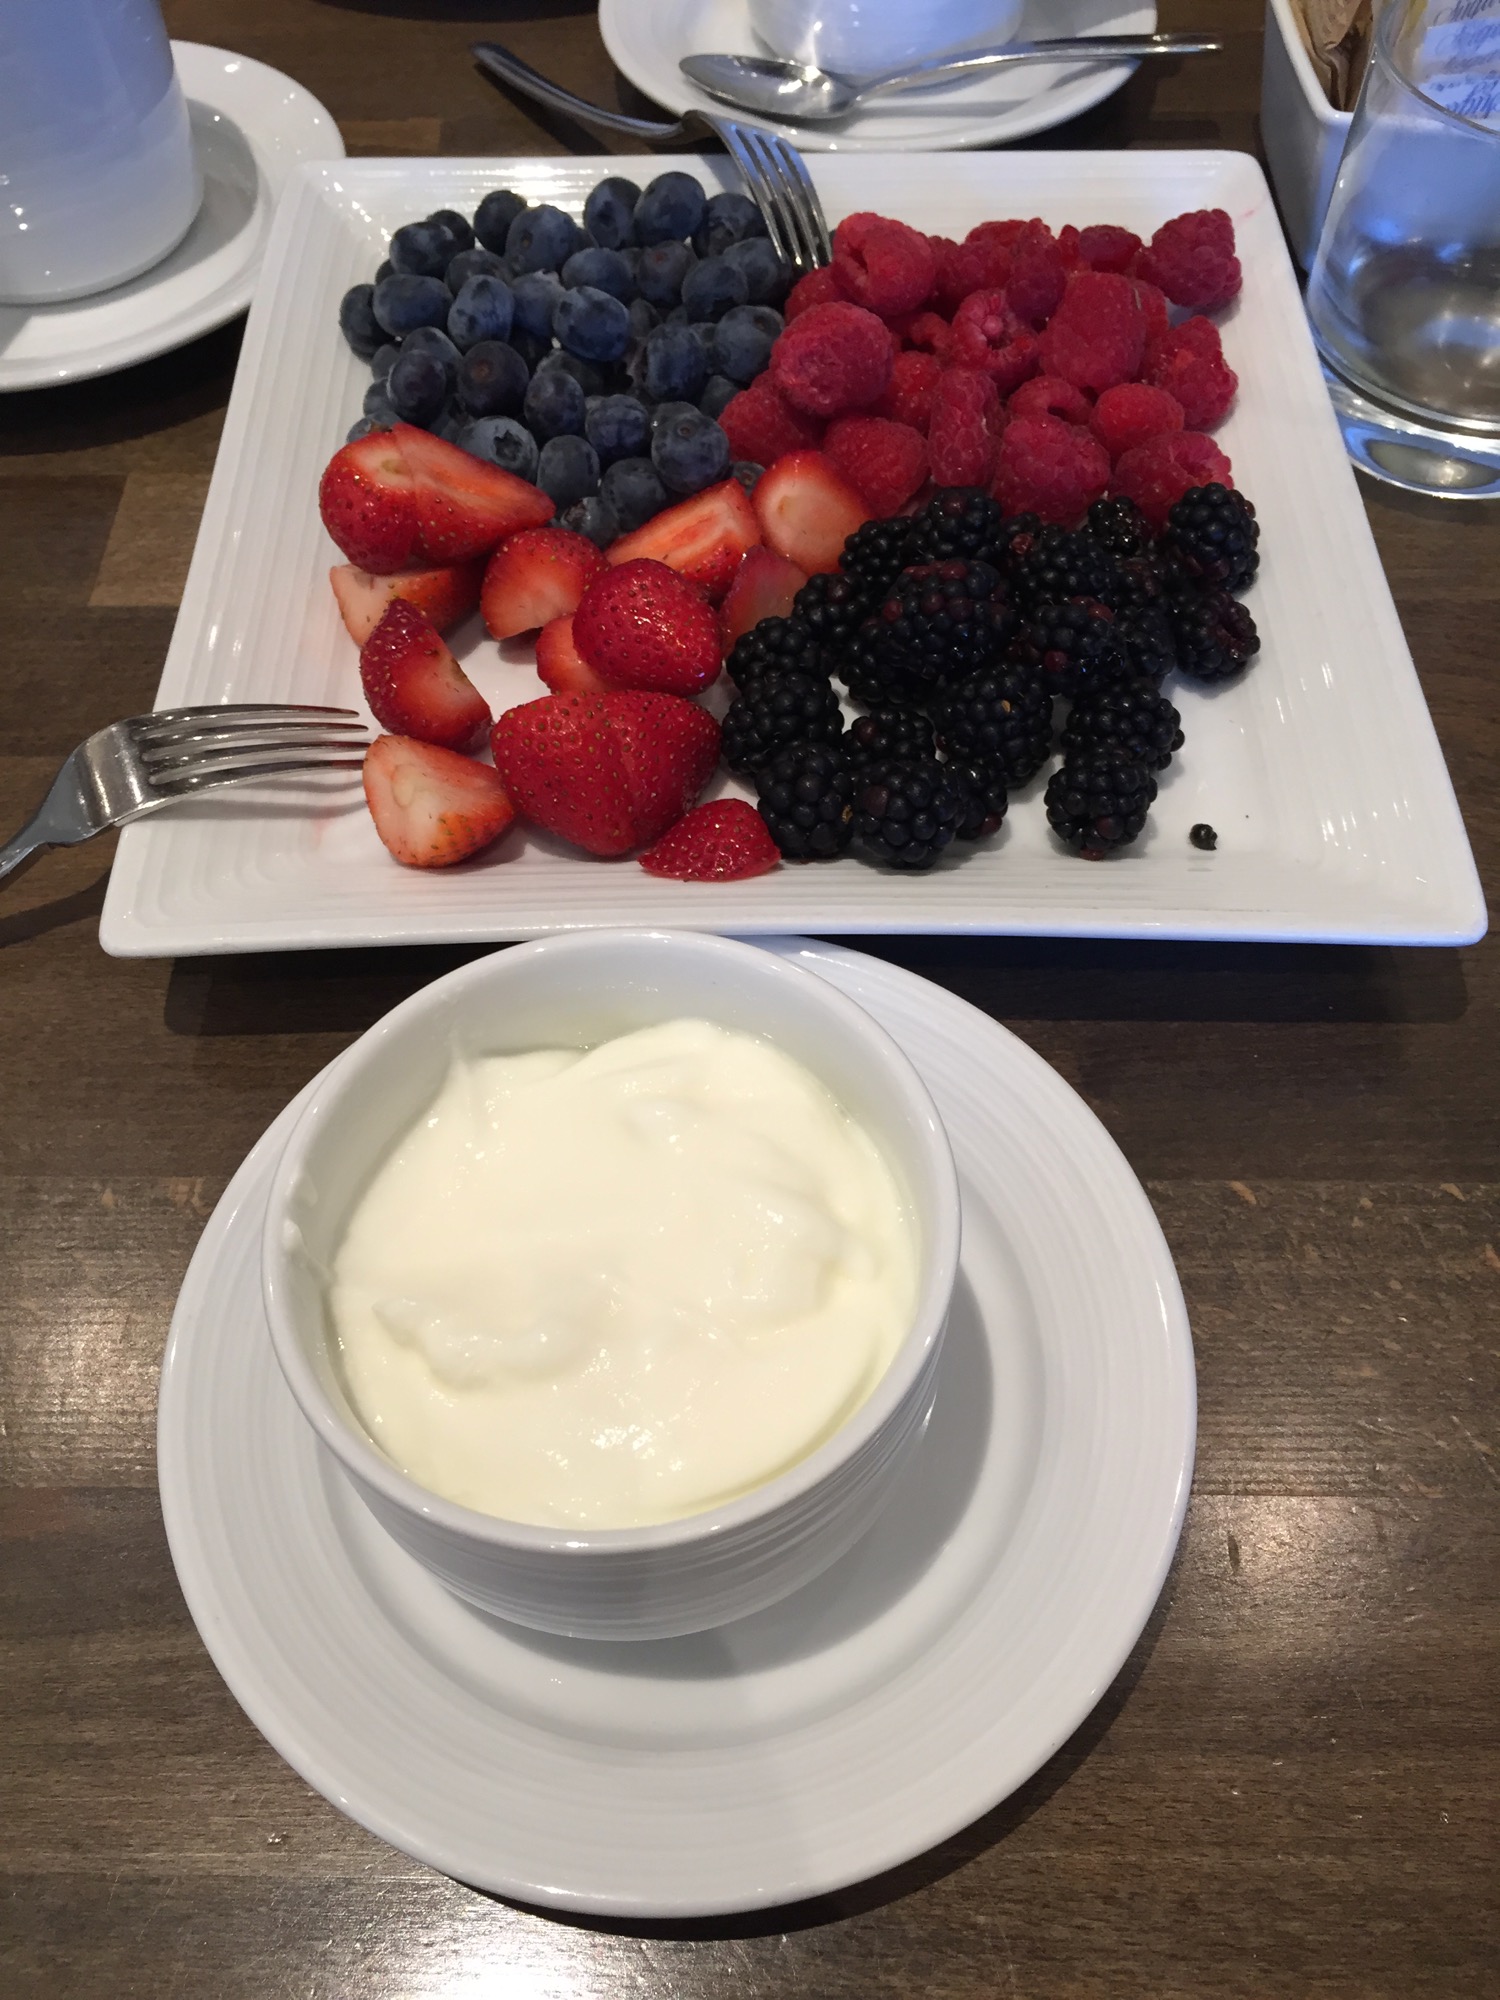 a plate of fruit and yogurt